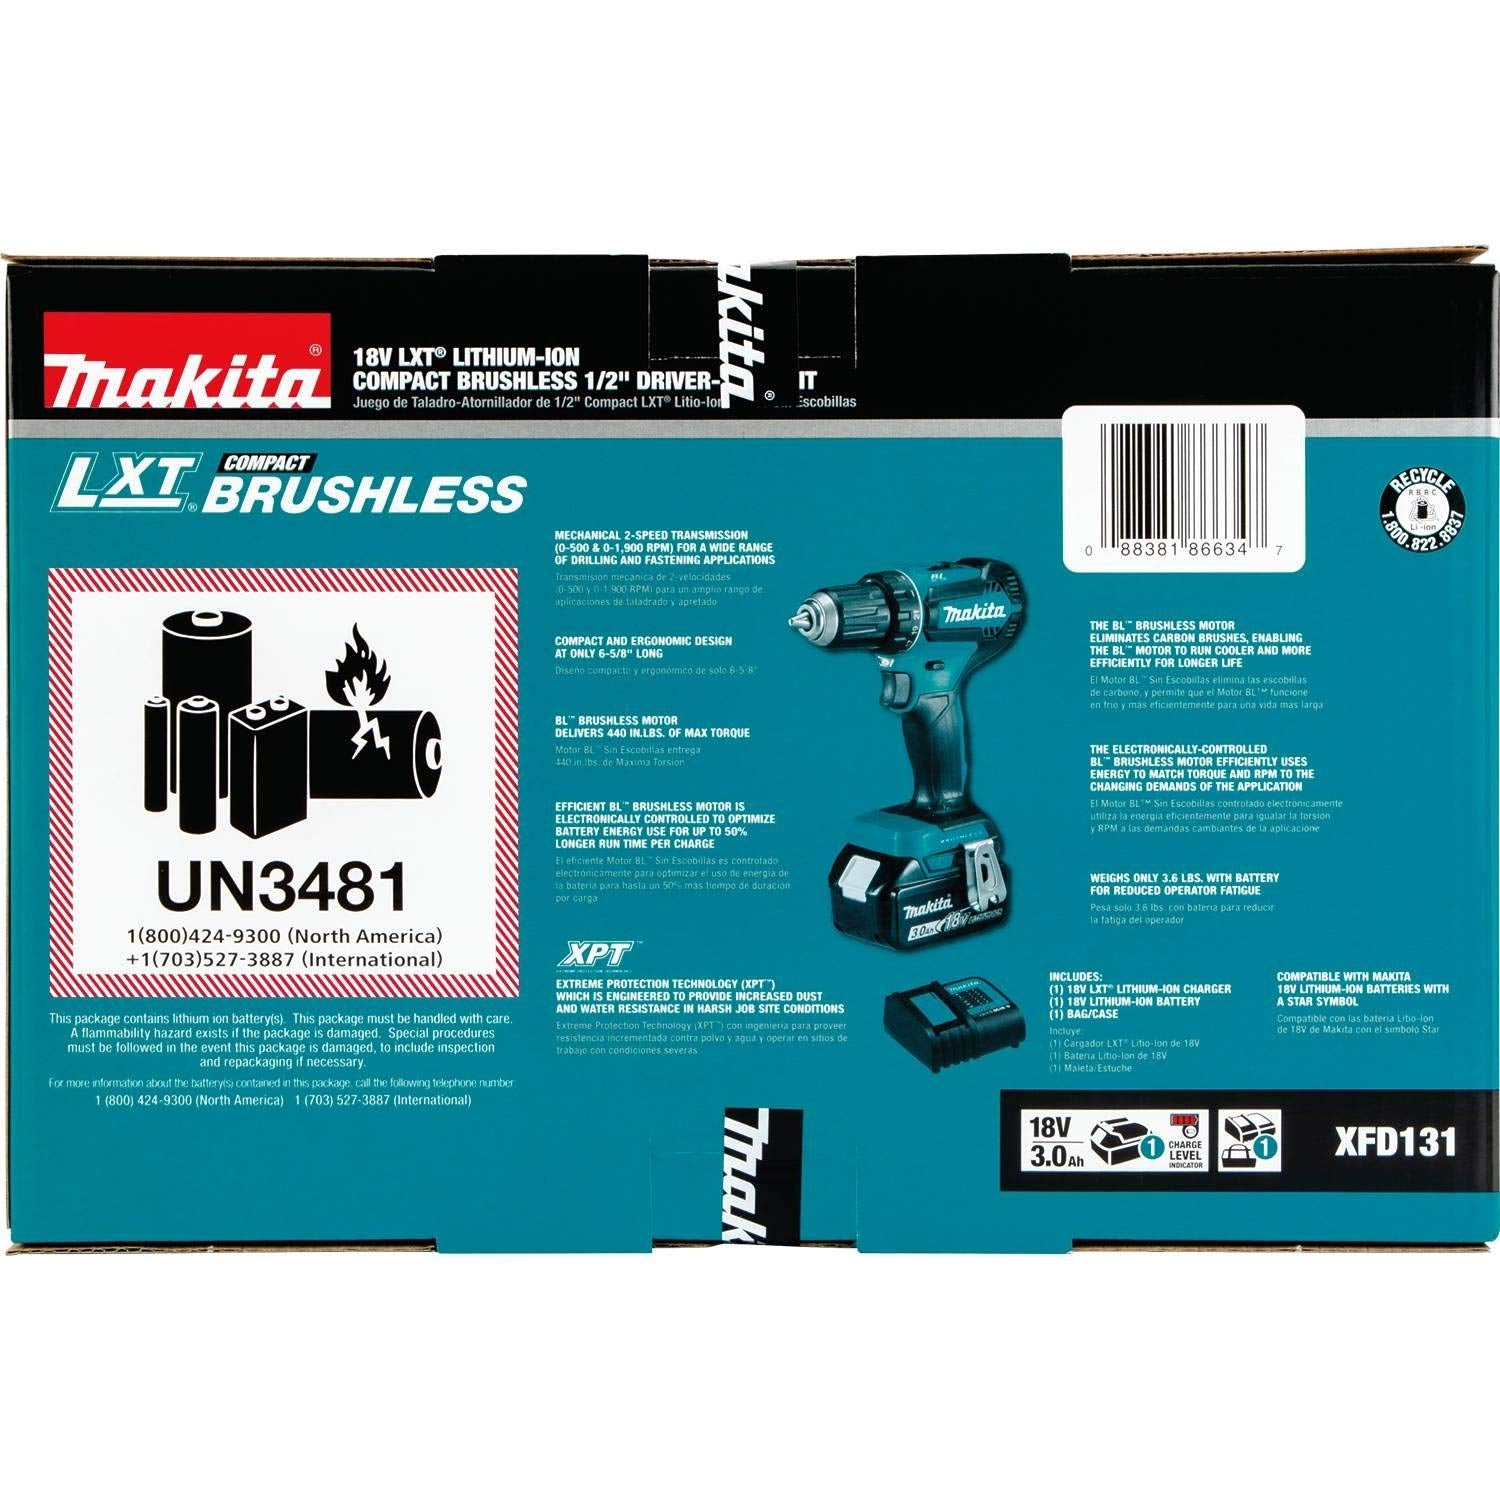 Makita XFD131 18V LXT® Lithium-Ion Brushless Cordless 1/2" Driver-Drill Kit (3.0Ah)